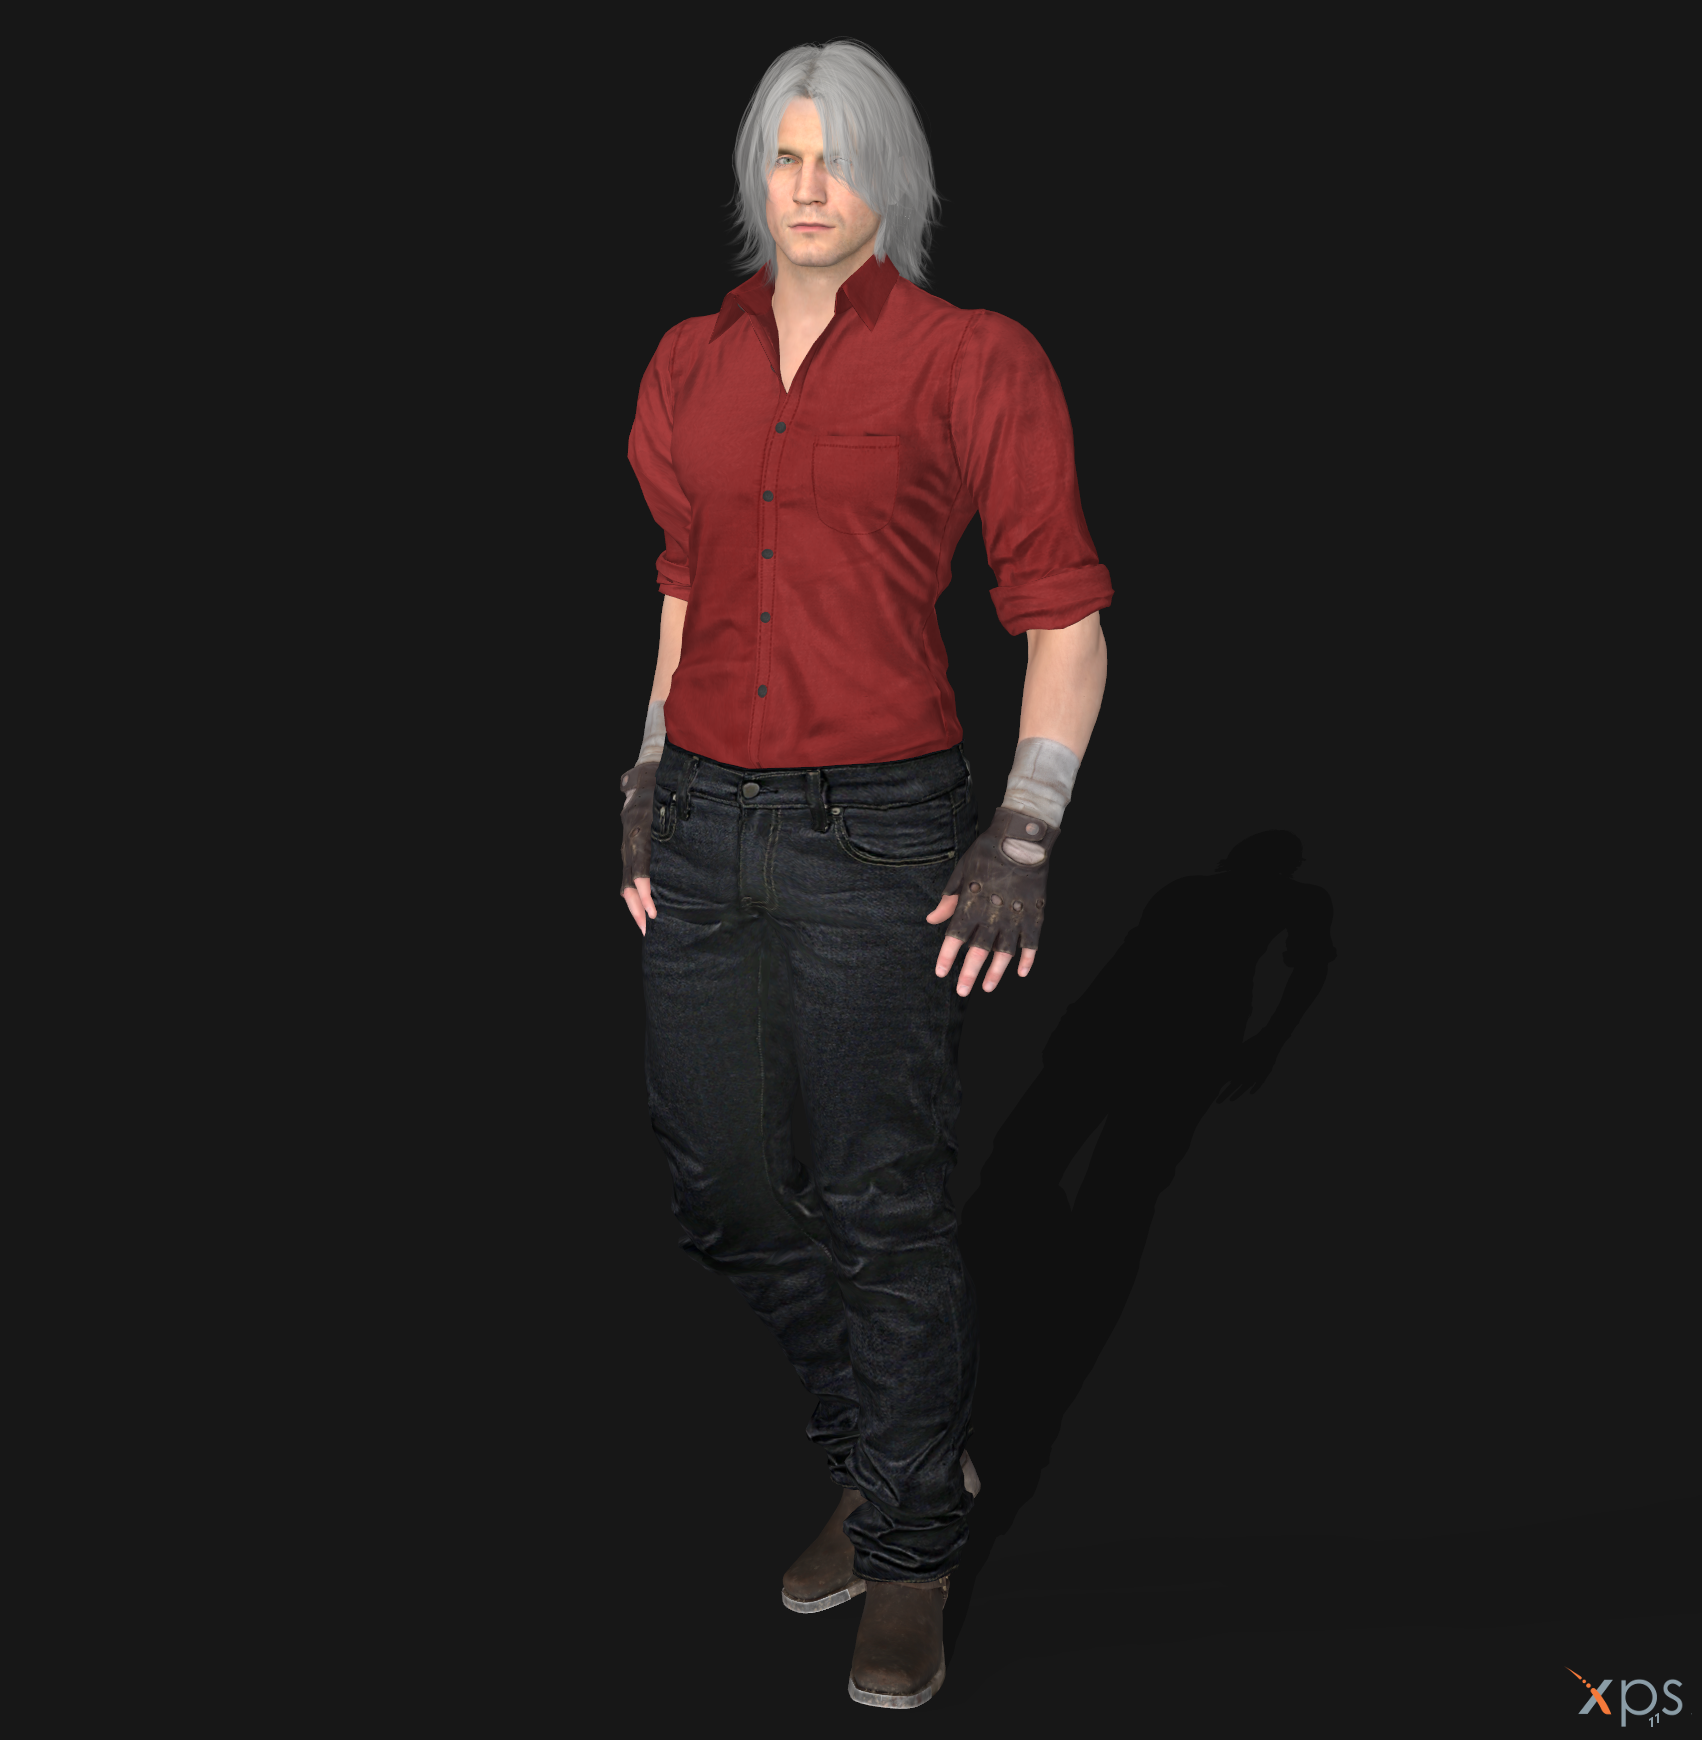 Nero DMC5 suit for Dante file - Mod DB